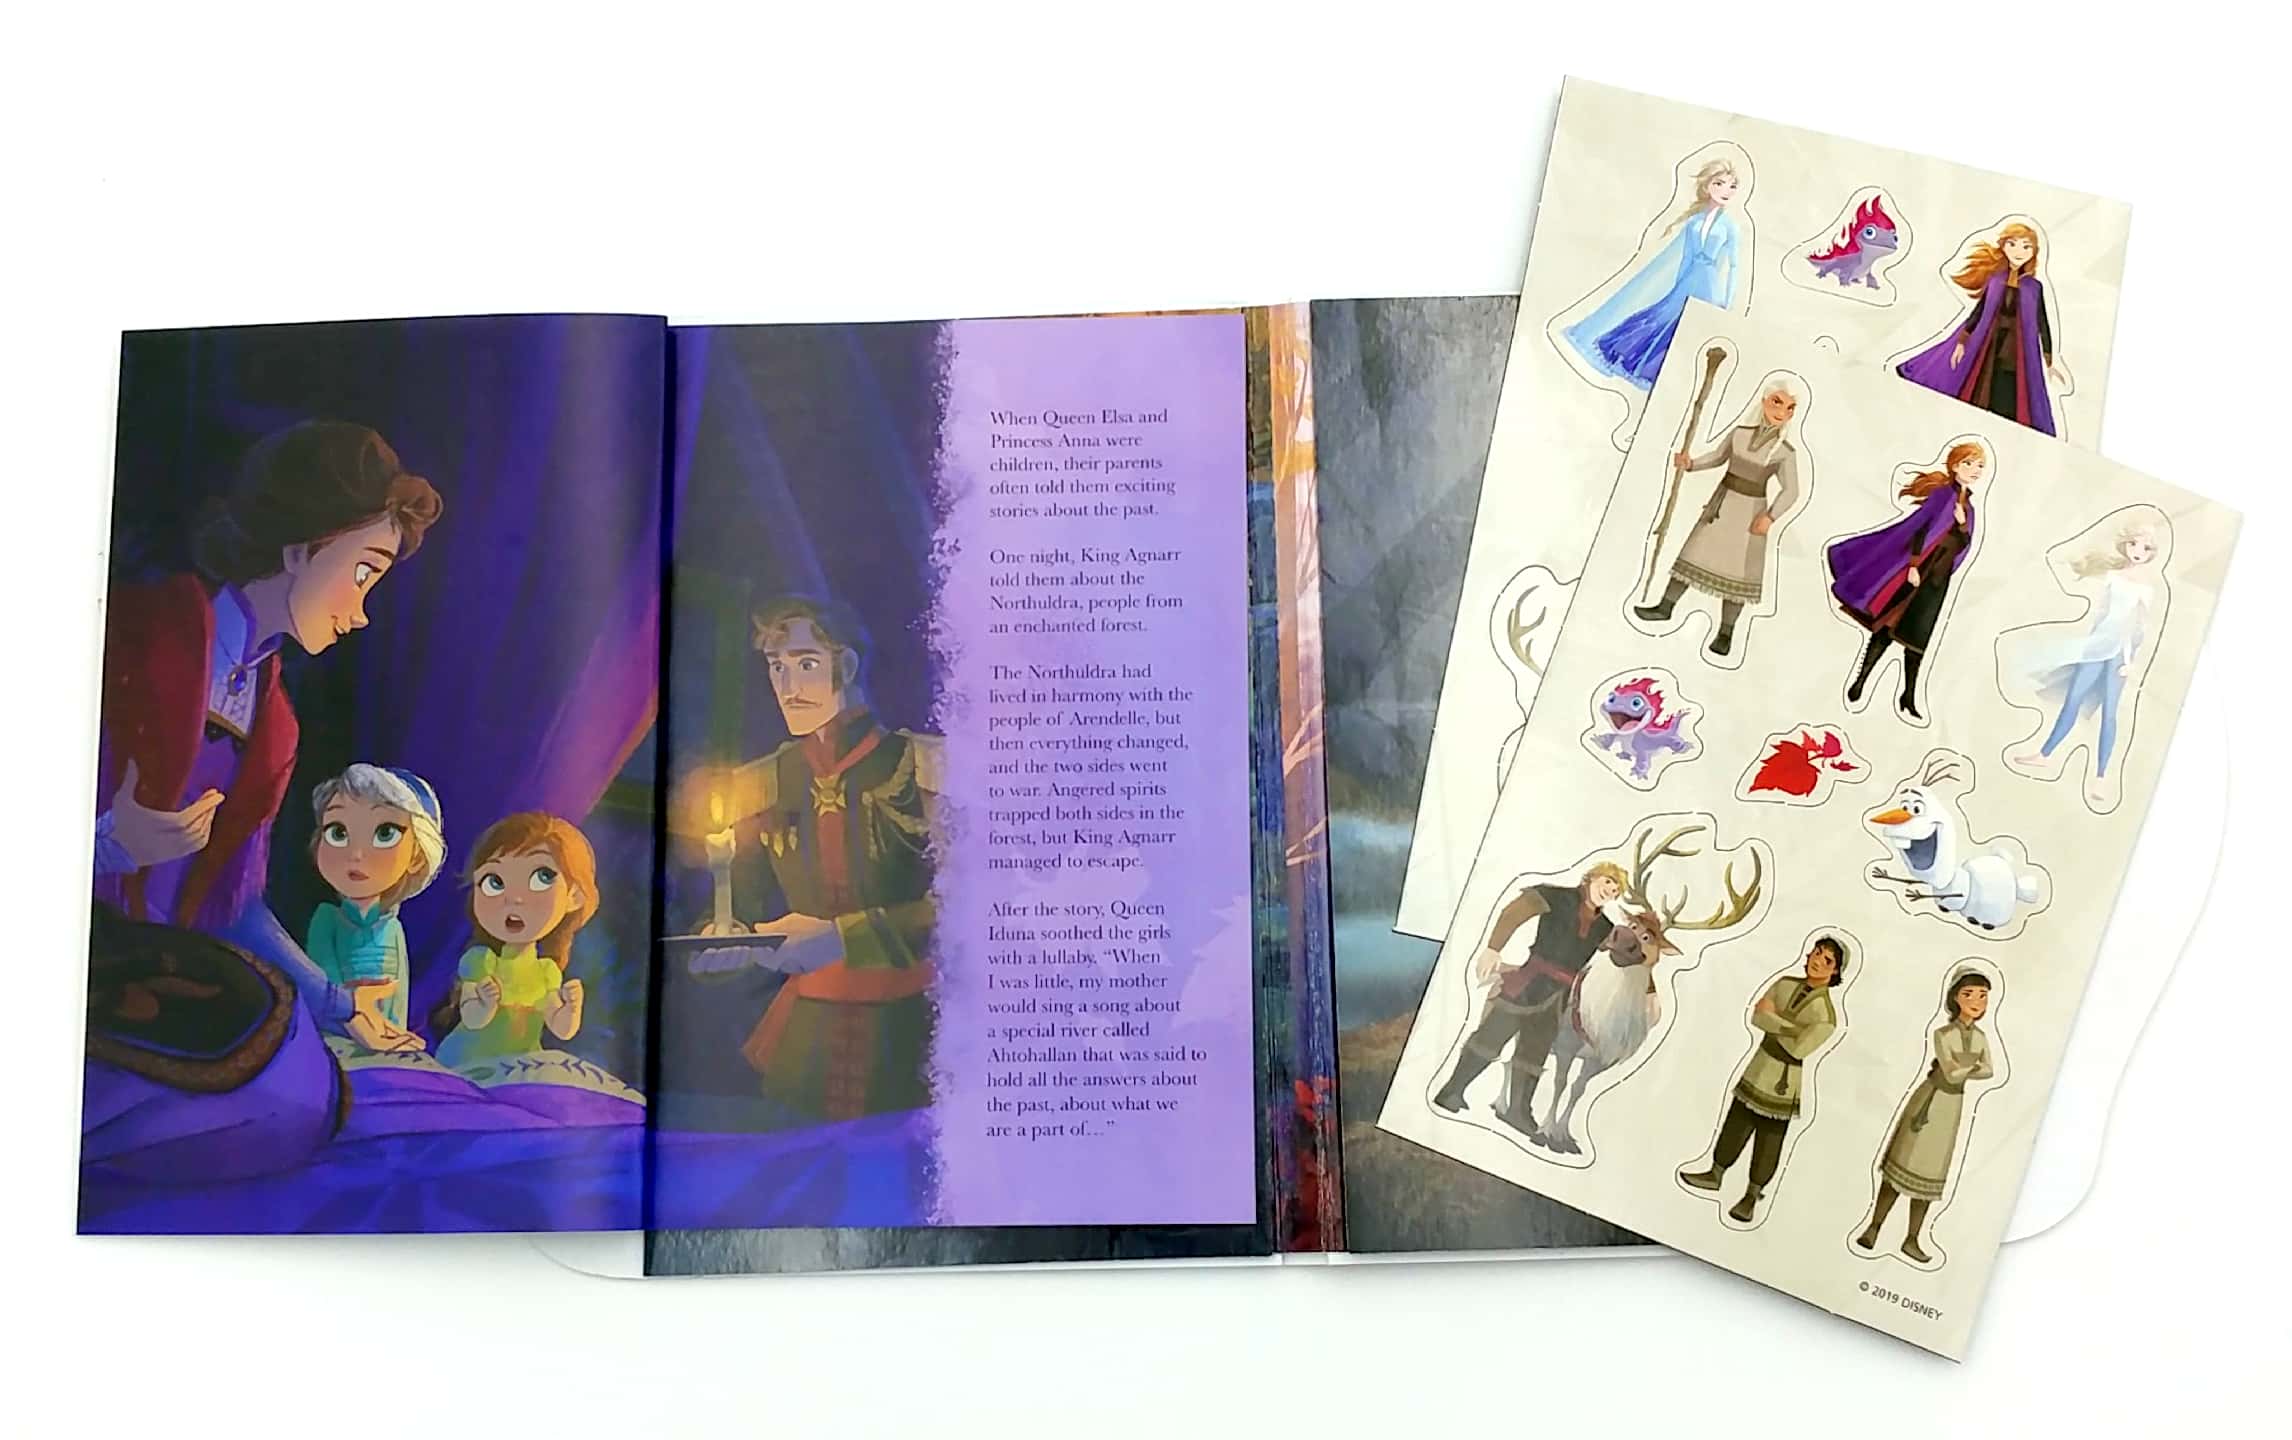 Disney Frozen 2 My Magnet &amp; Book Pack